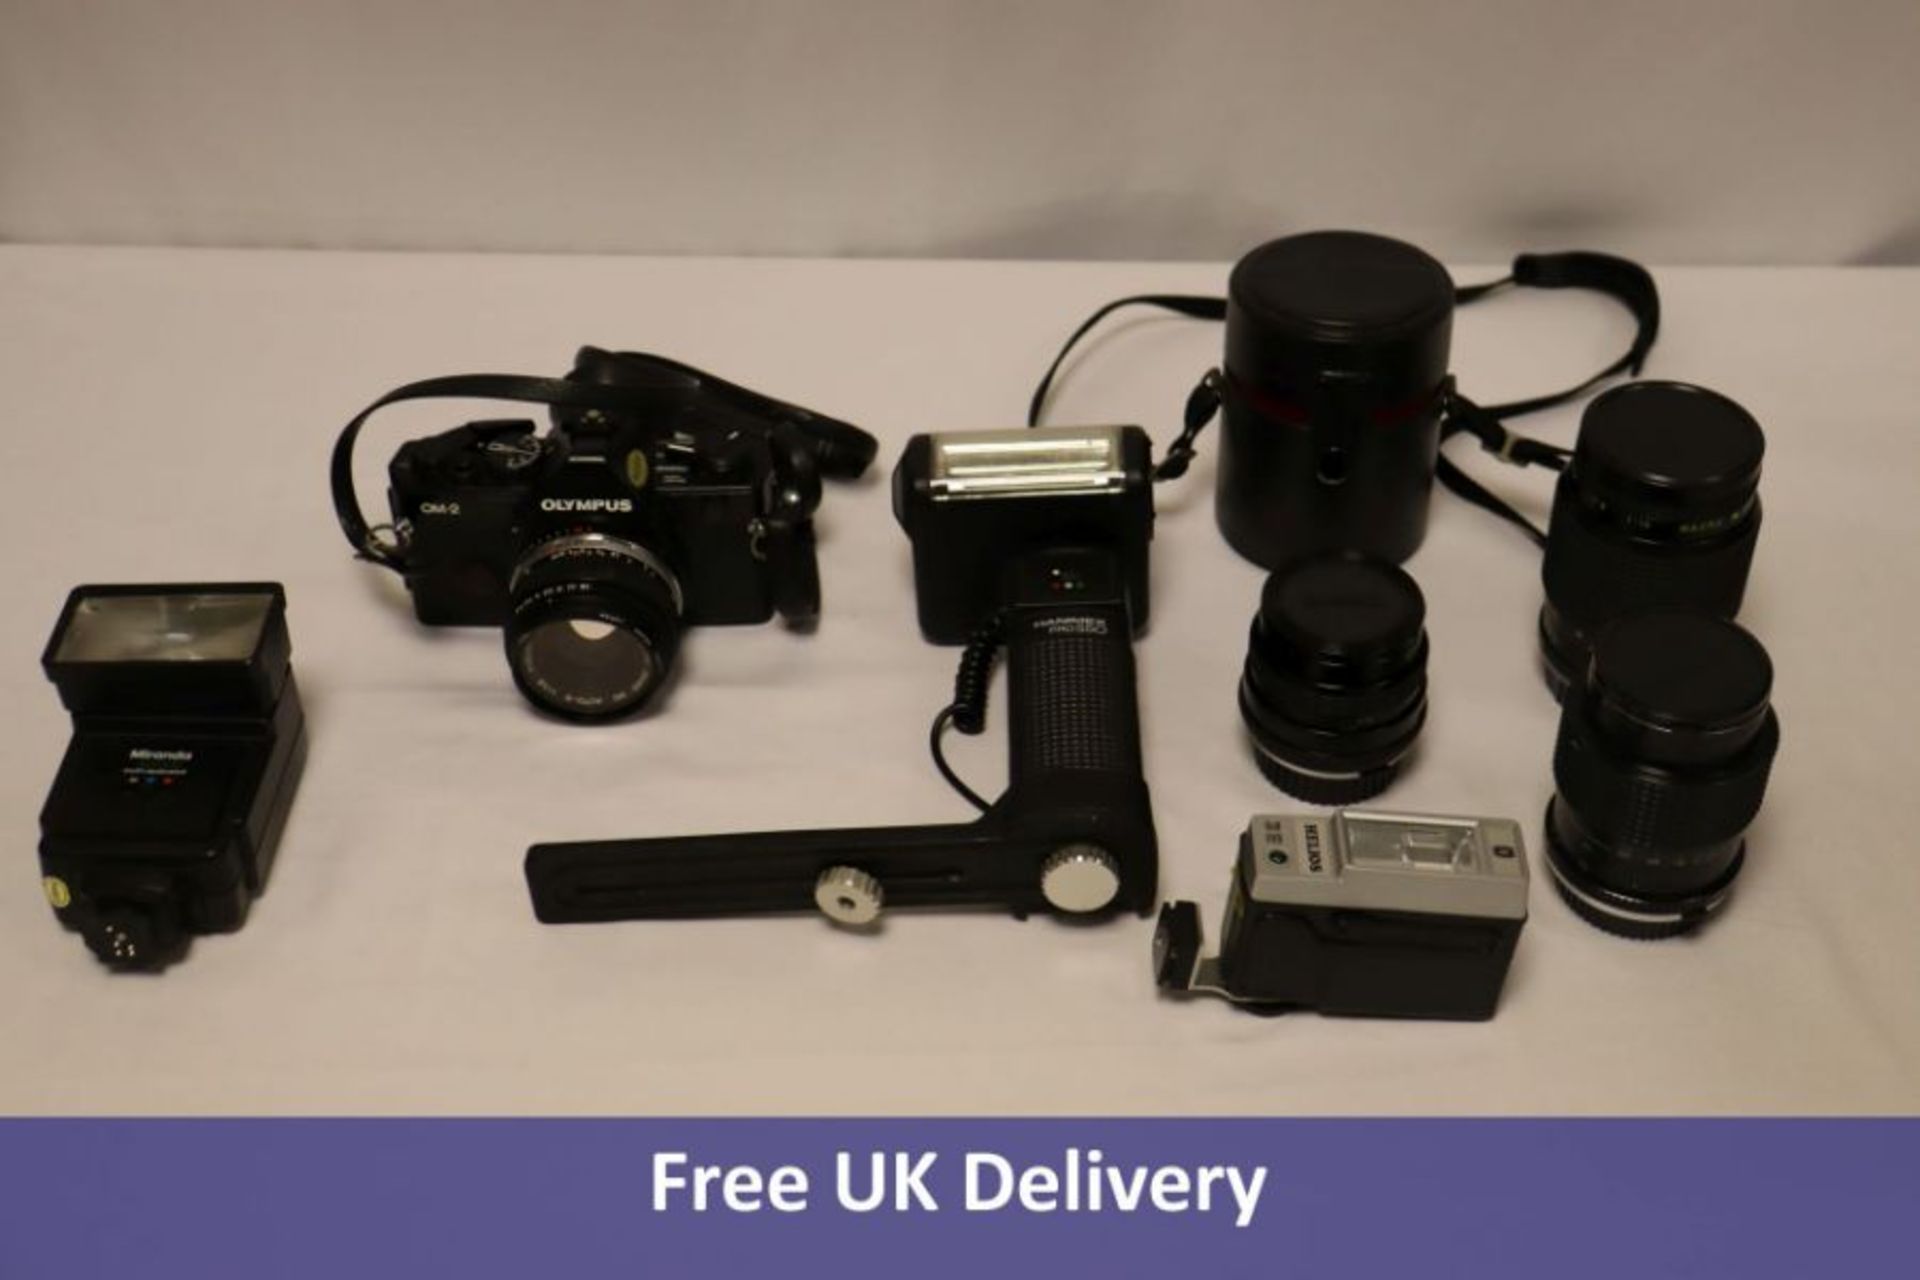 Olympus OM-2 Spot/Program 35mm Film Camera with 3x Macro Lenses, 3x Flashes. Used, no box, not teste